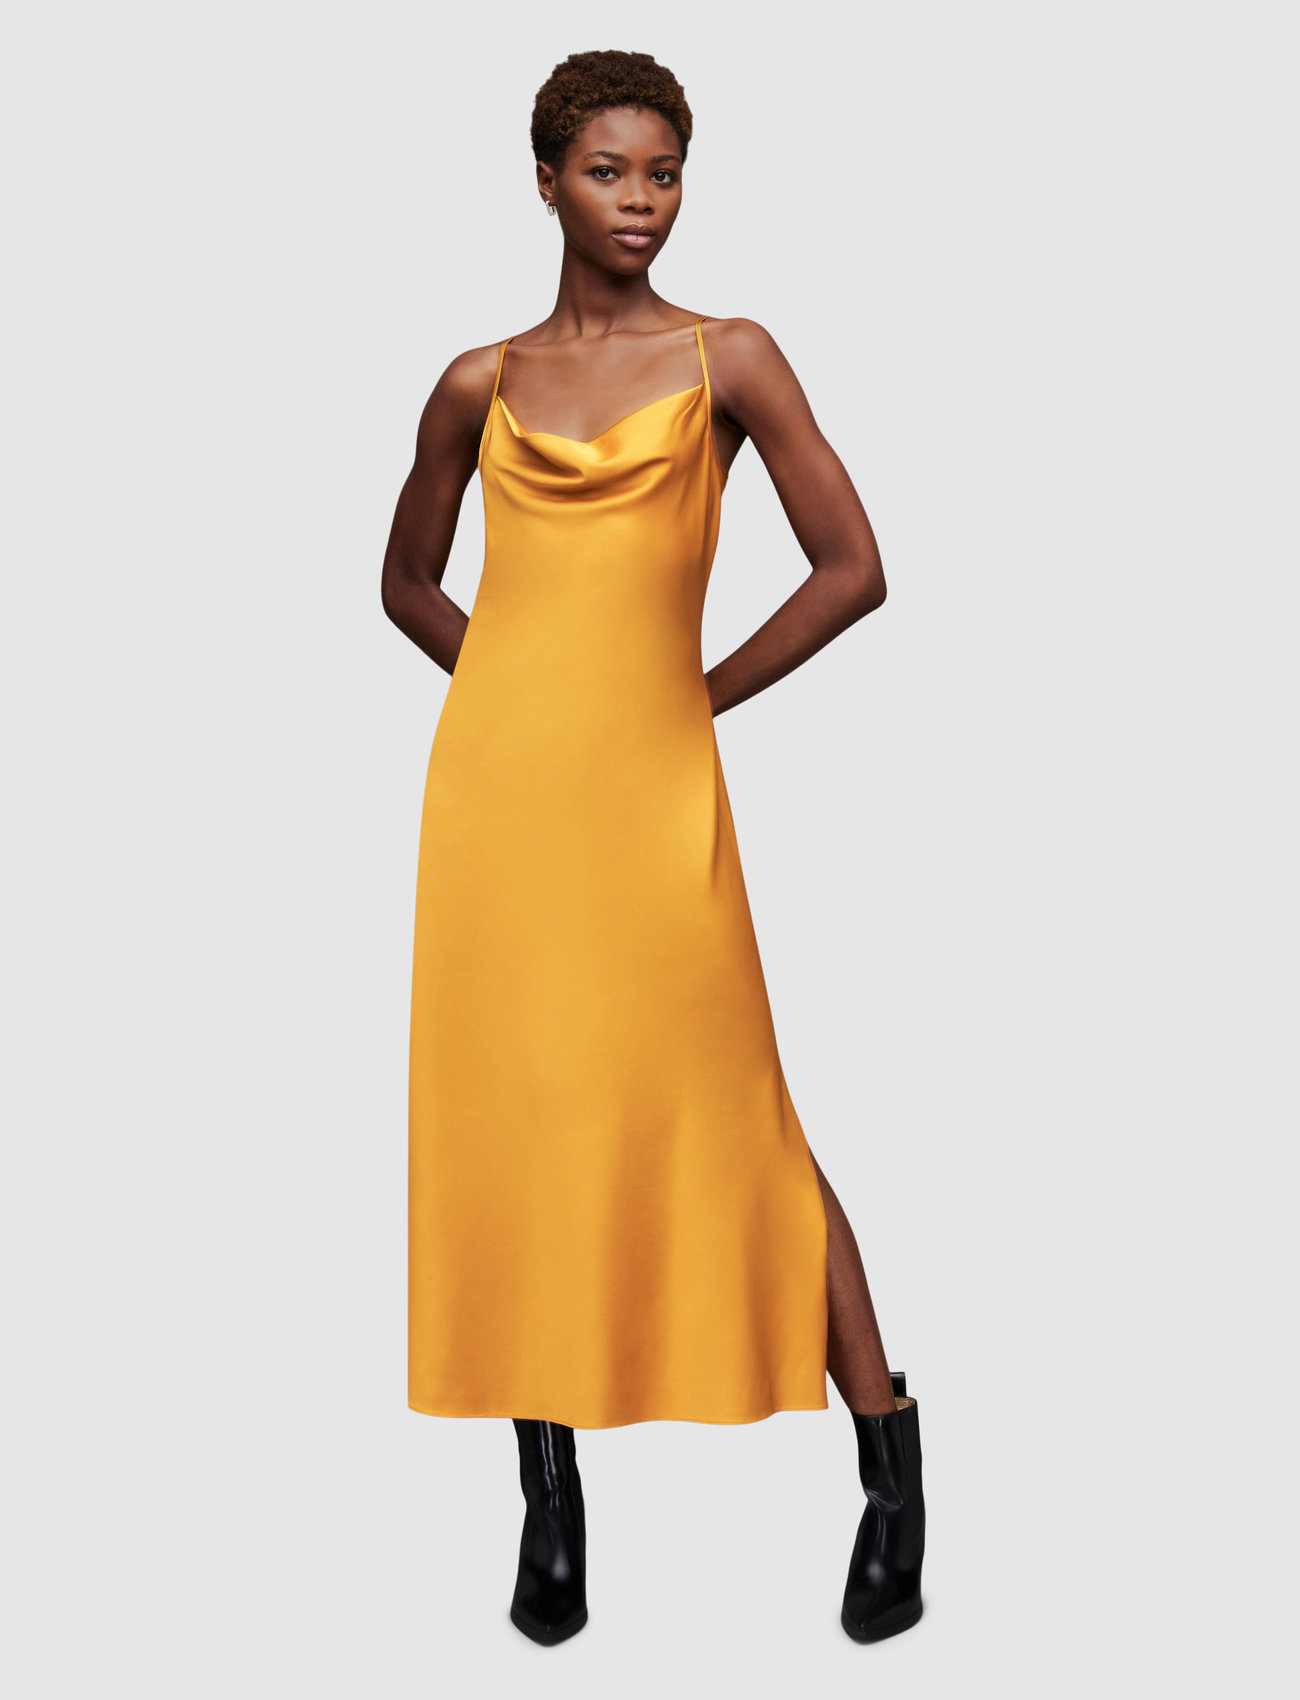 AllSaints - HADLEY DRESS - ochre yellow - 1